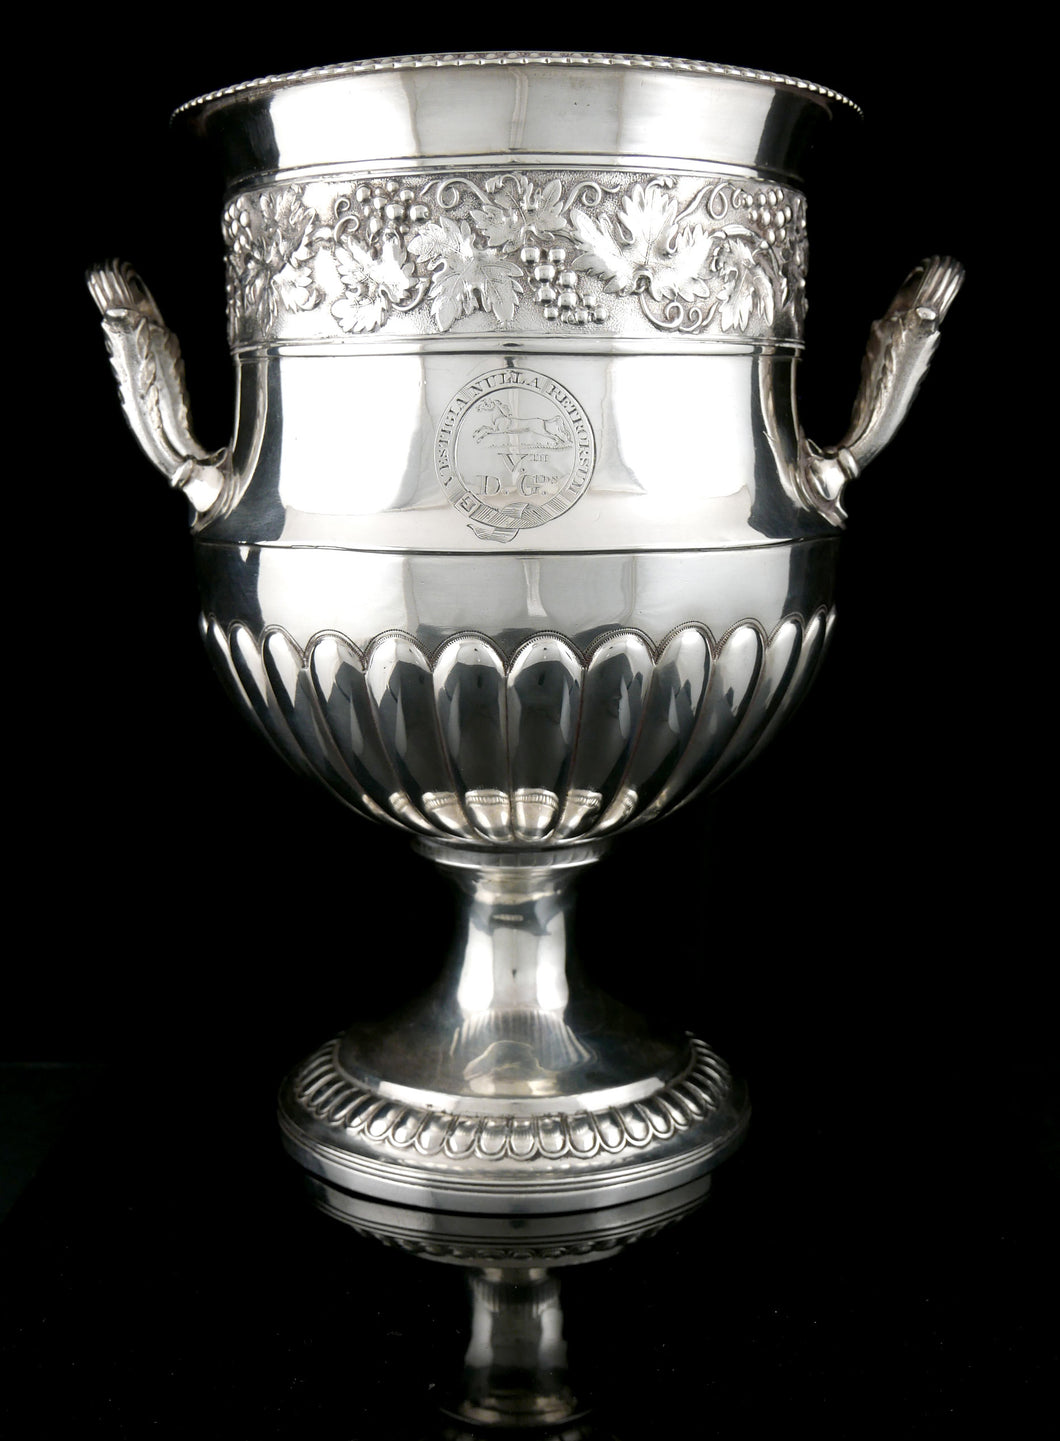 5th (Princess Charlotte of Wales’s) Dragoon Guards Presentation Cup, 1808